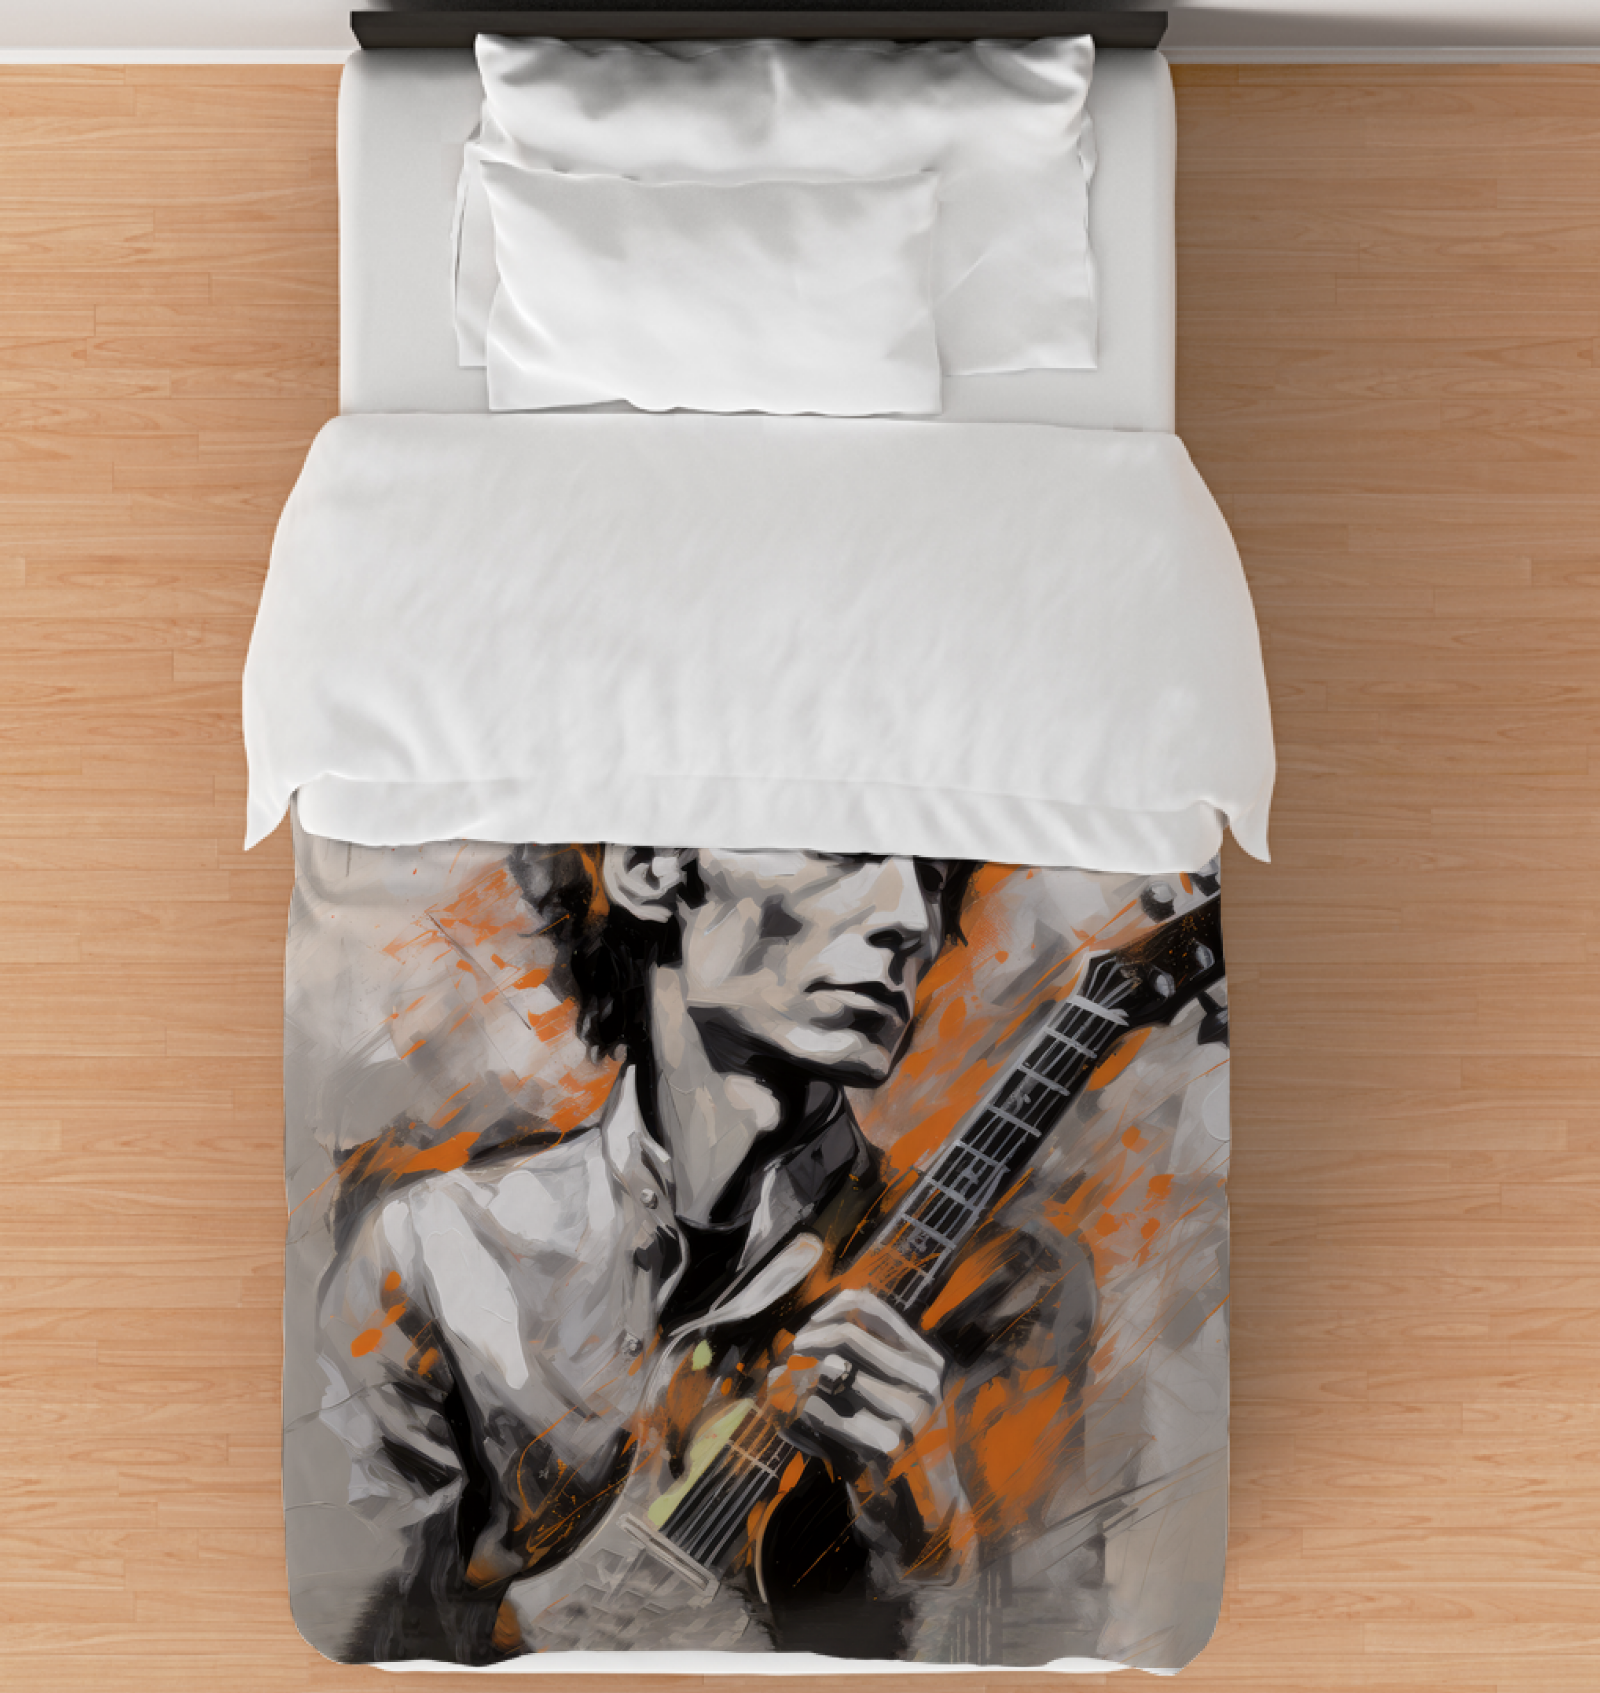 Harmony of Shapes Comforter - Modern Artistic Bedding.